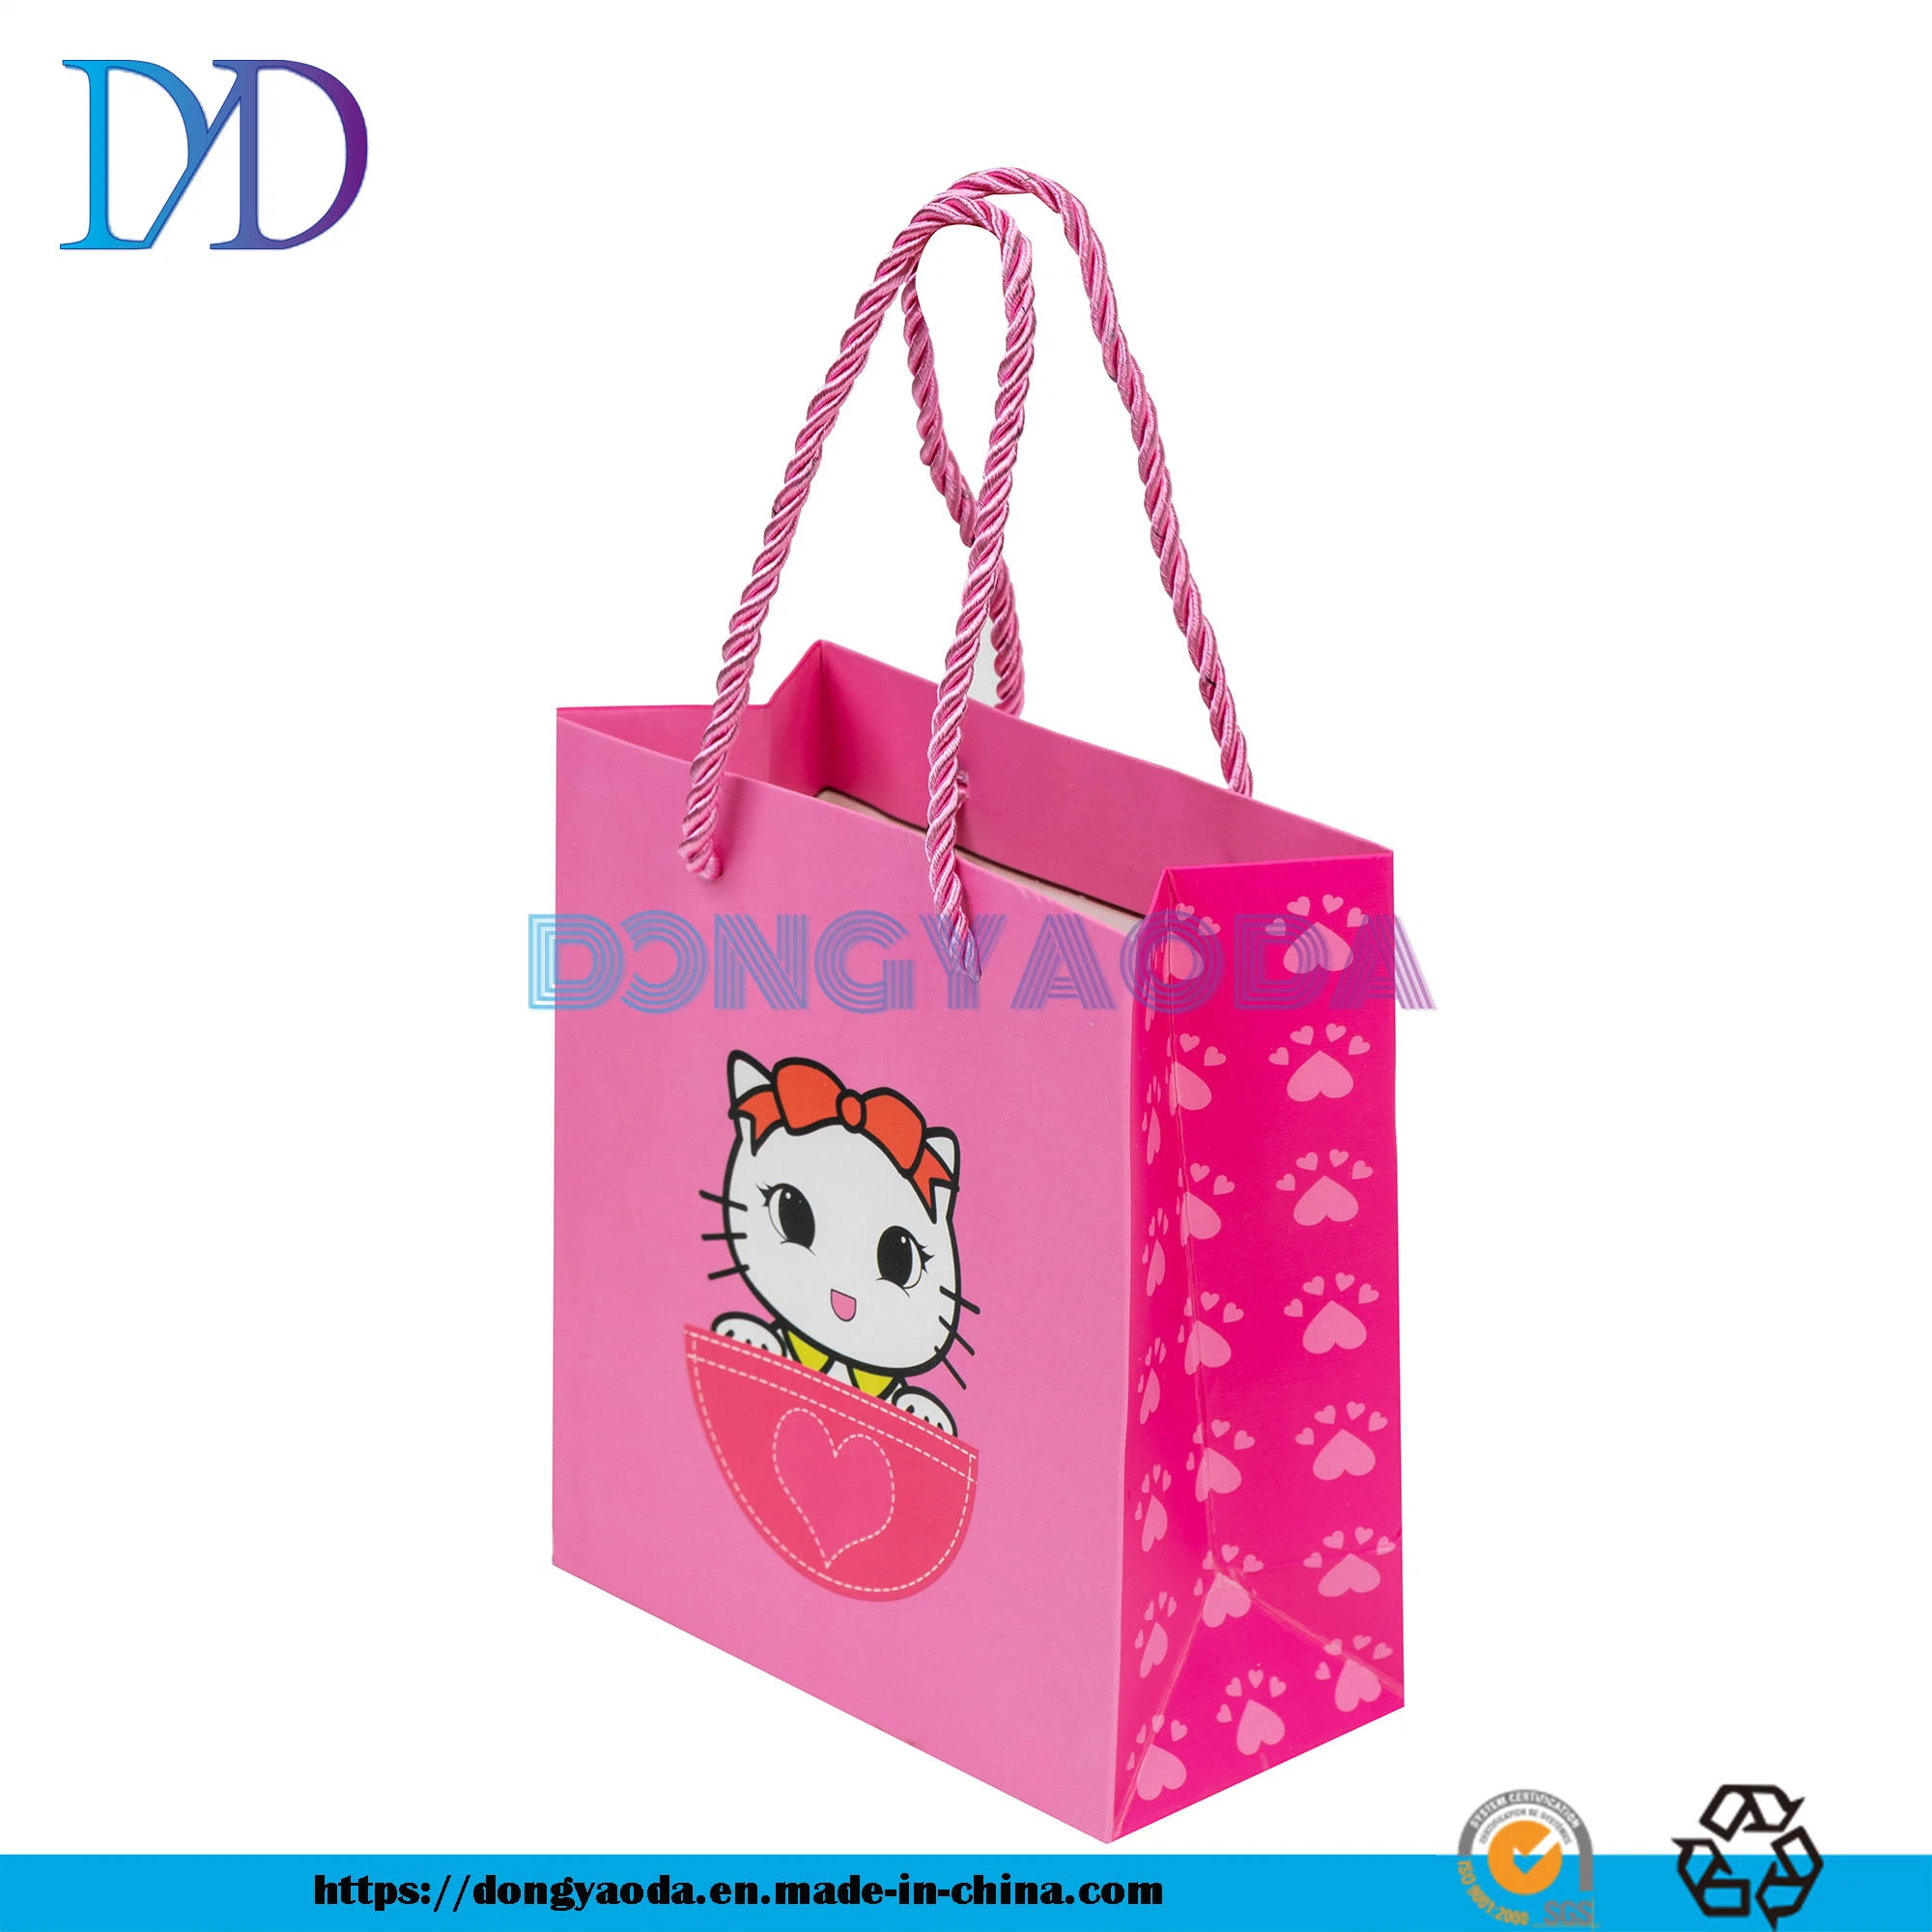 Printed Cartoon Image White Cardboard Bag, Gift Box Gift Bag Tote Bag